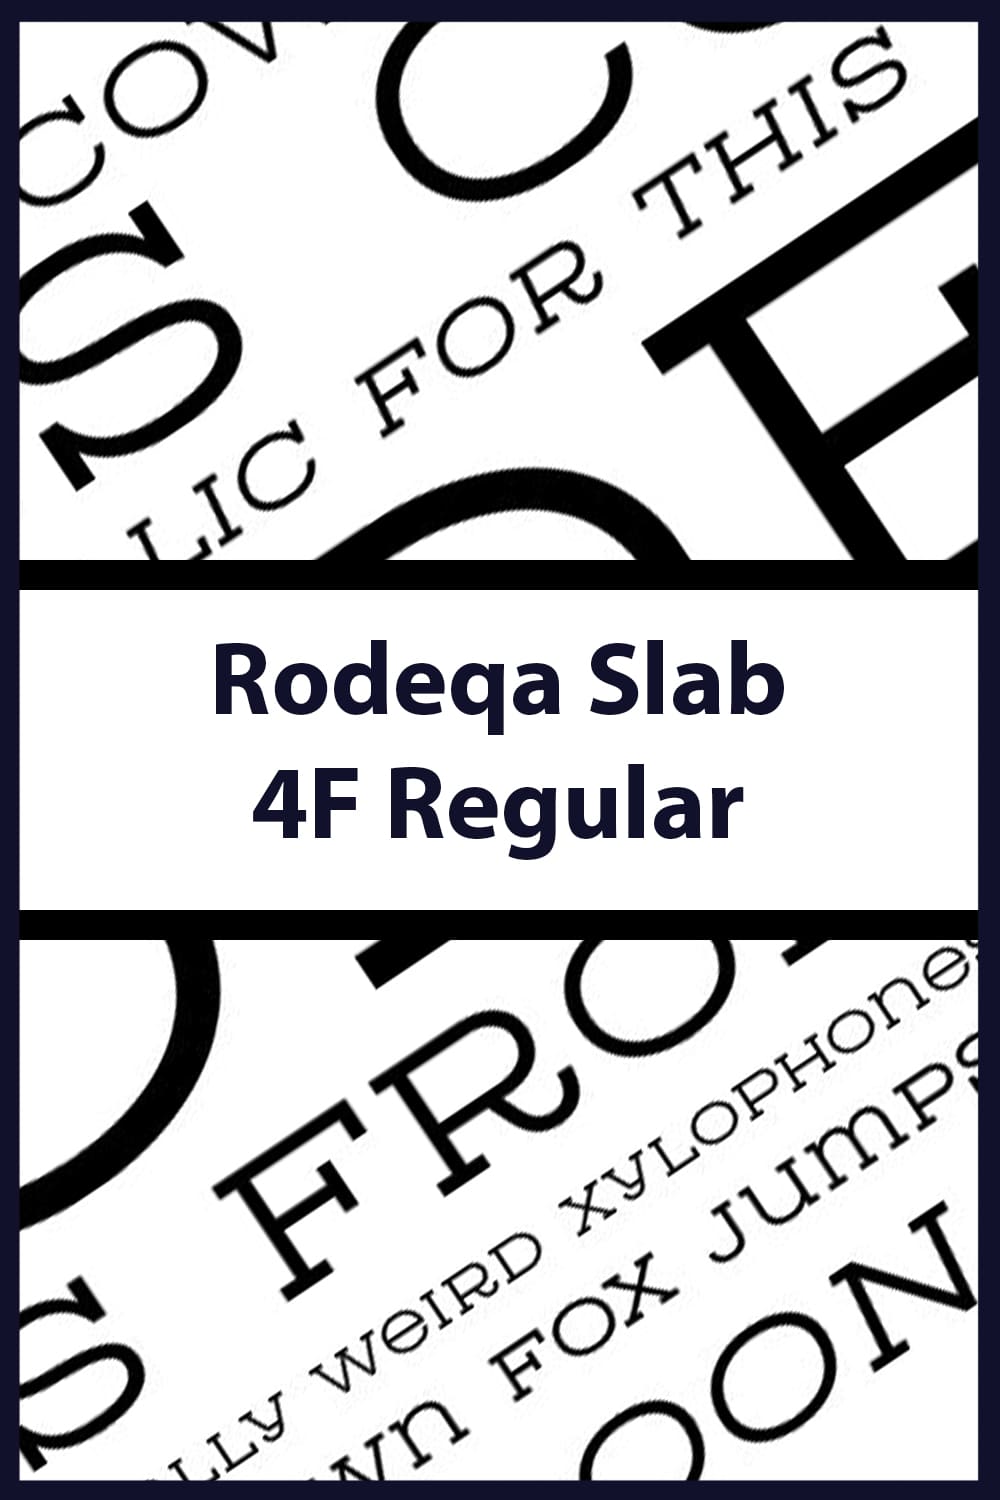 Black and white Rodeqa Slab 4F Regulars.